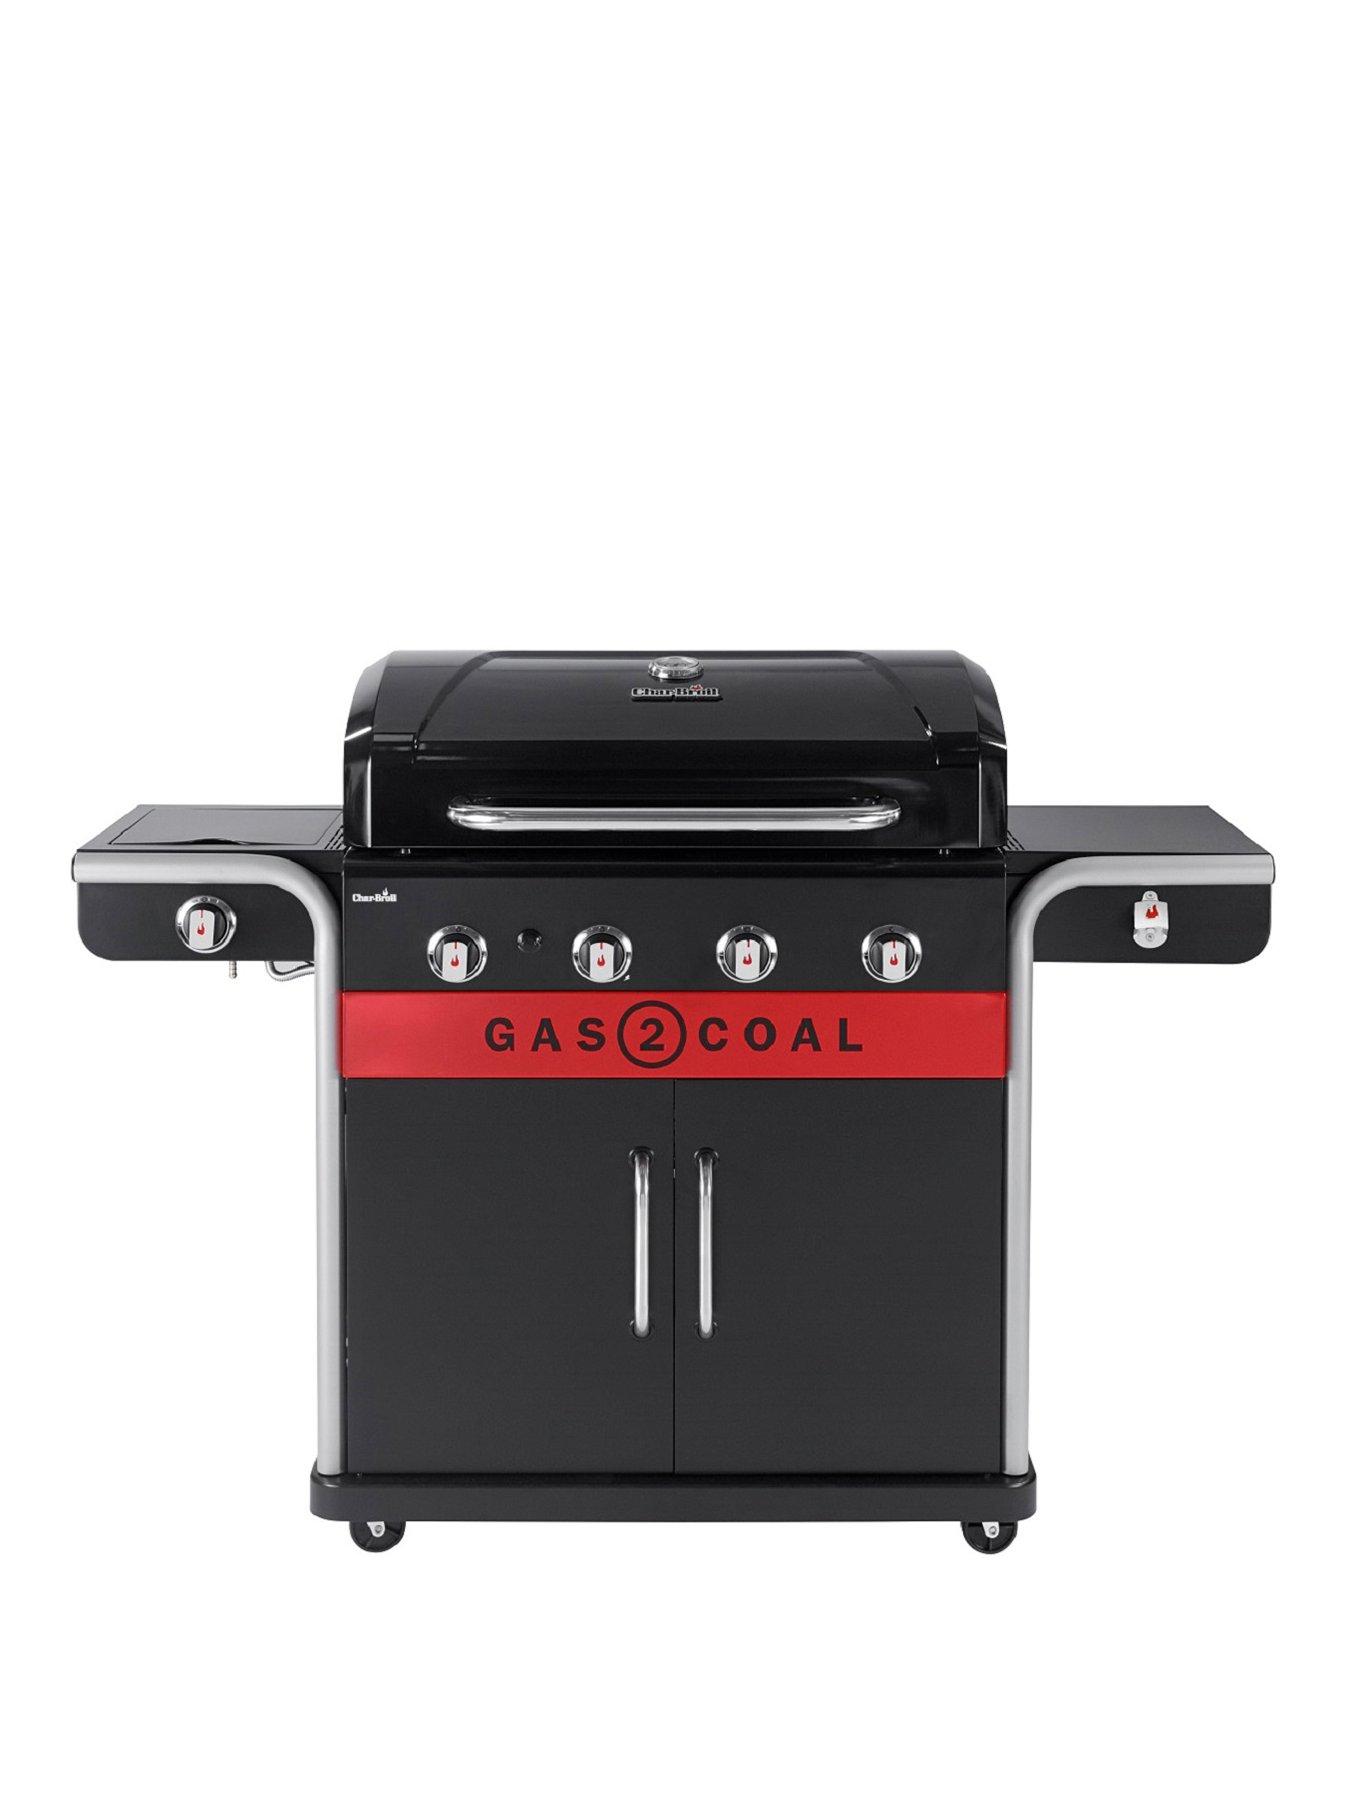 Char-Broil Gas2Coal&Reg; 440 Hybrid Grill - 4 Burner Gas &Amp; Coal Barbecue Grill (Black Finish)